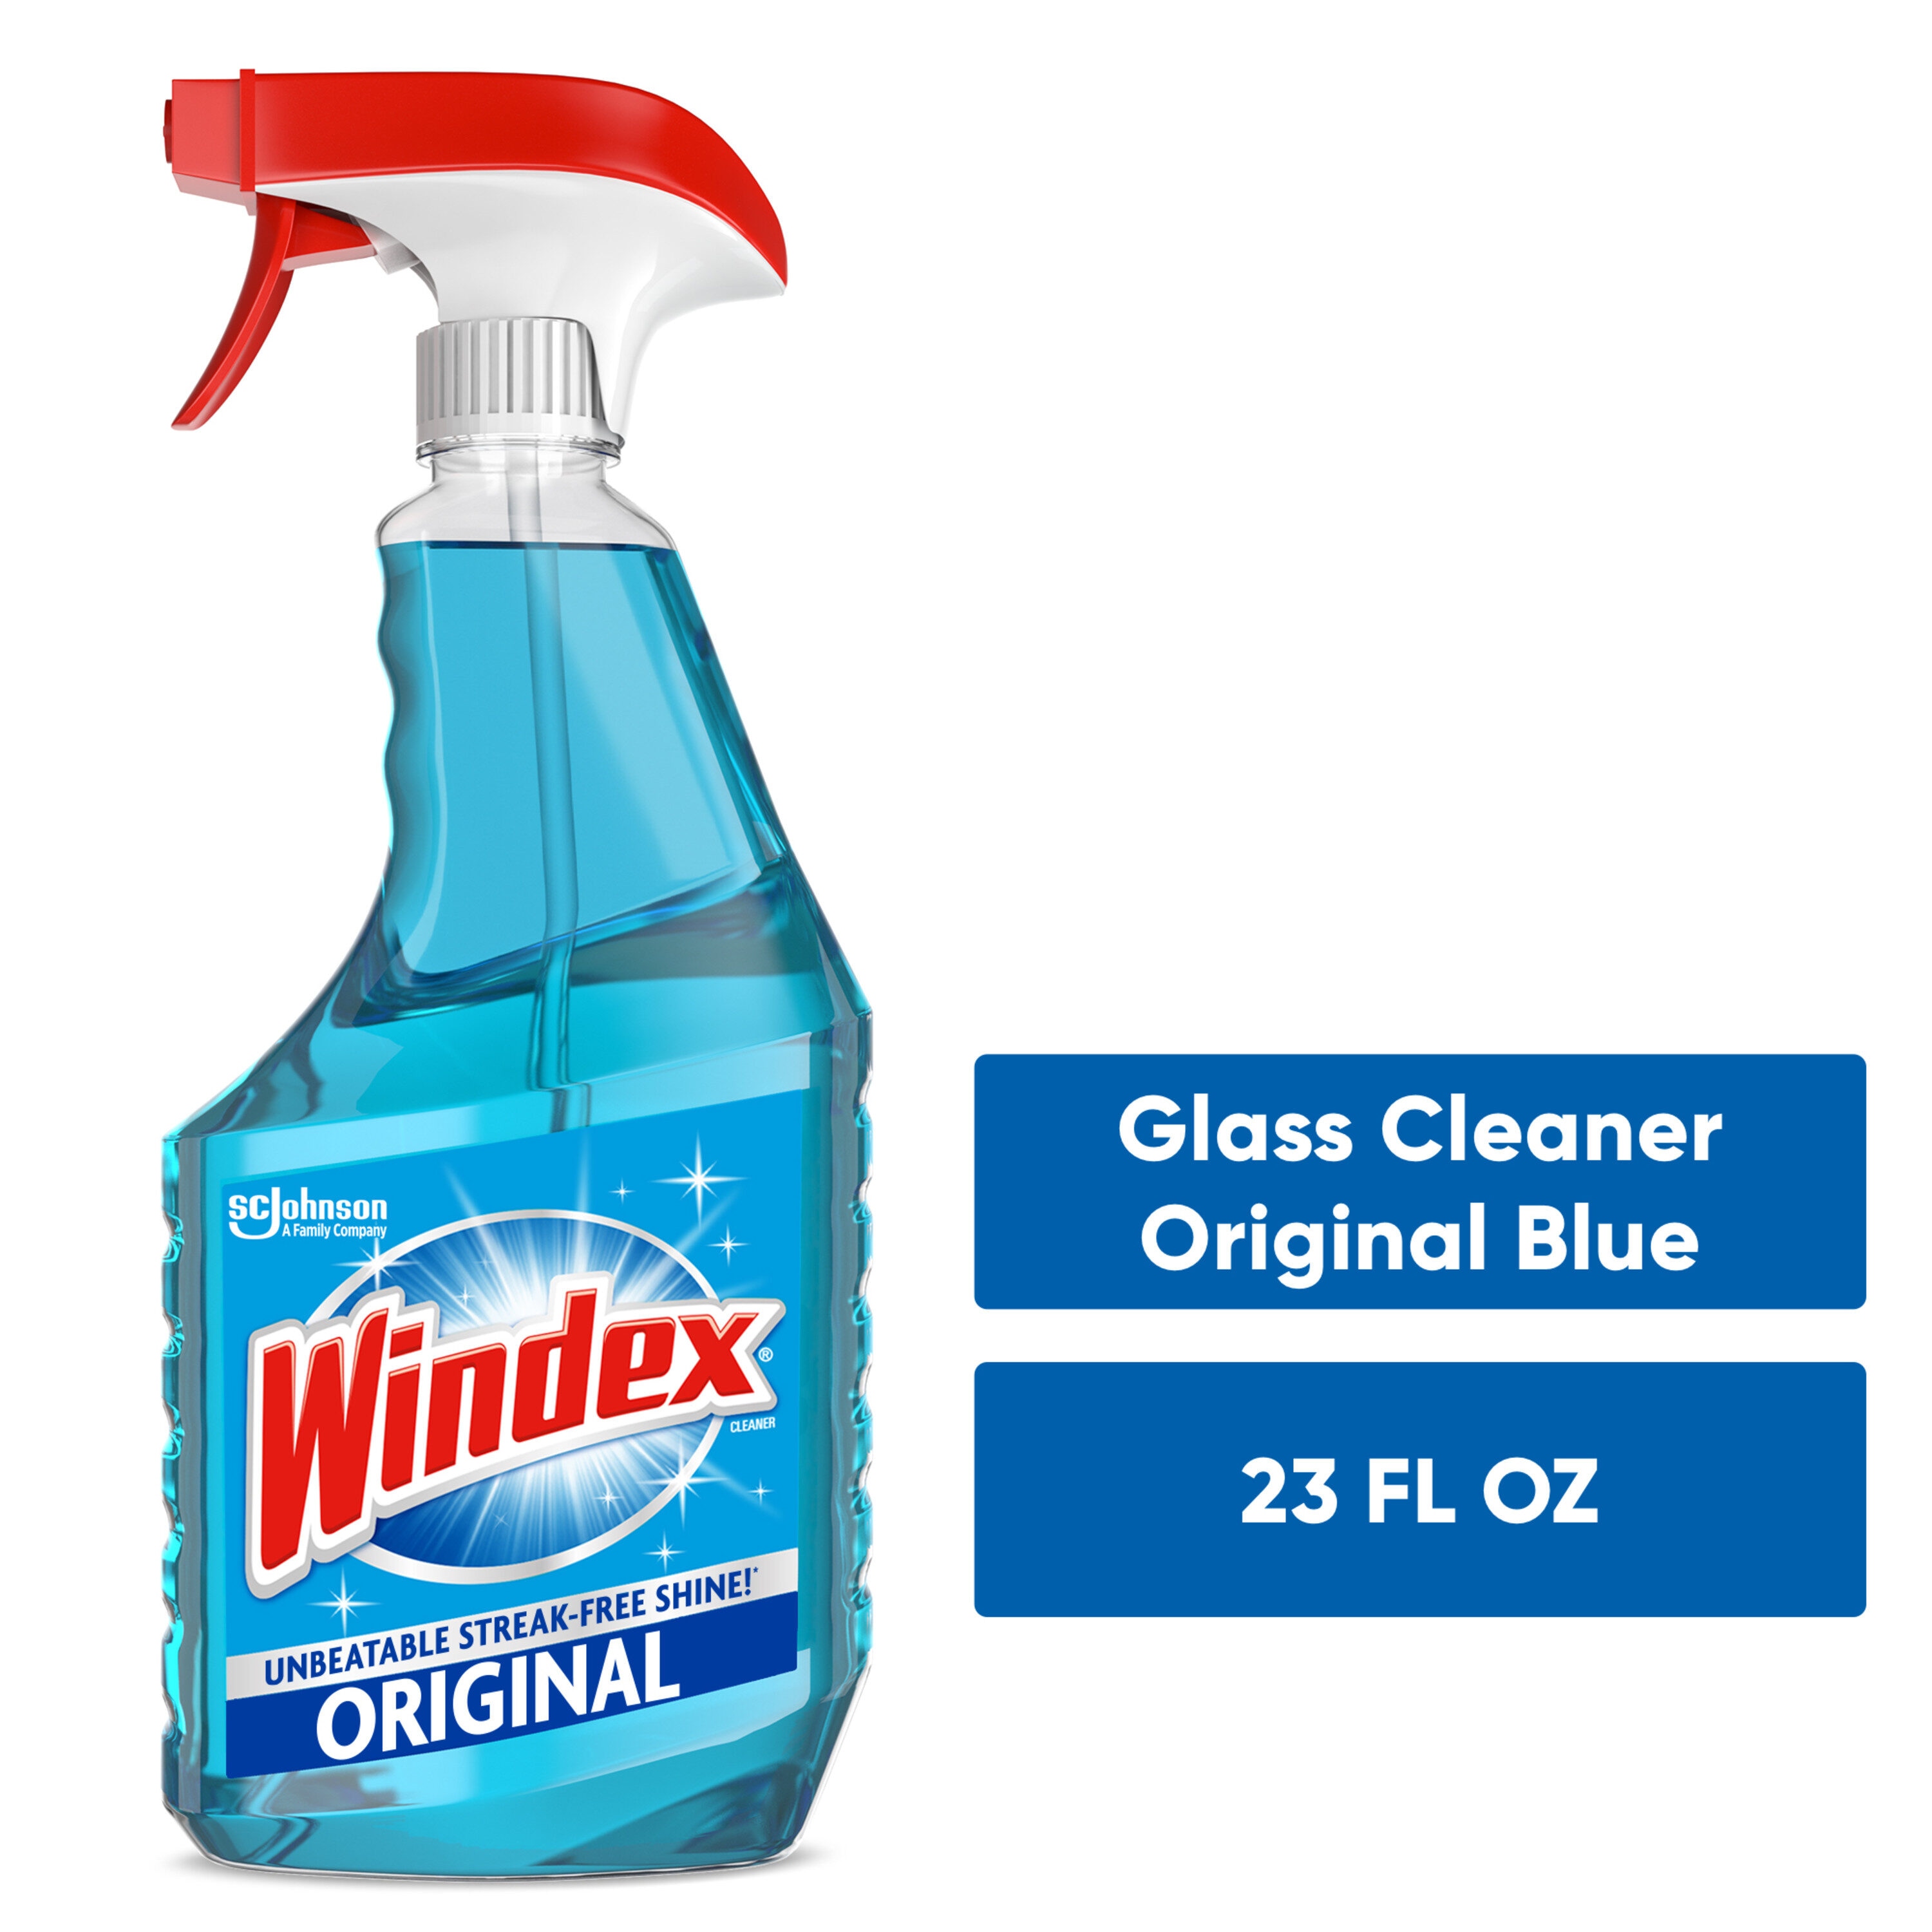 Rain-X 5080233 2-In-1 Glass Cleaner Plus Rain Repellent, 18 Ounce , BLUE